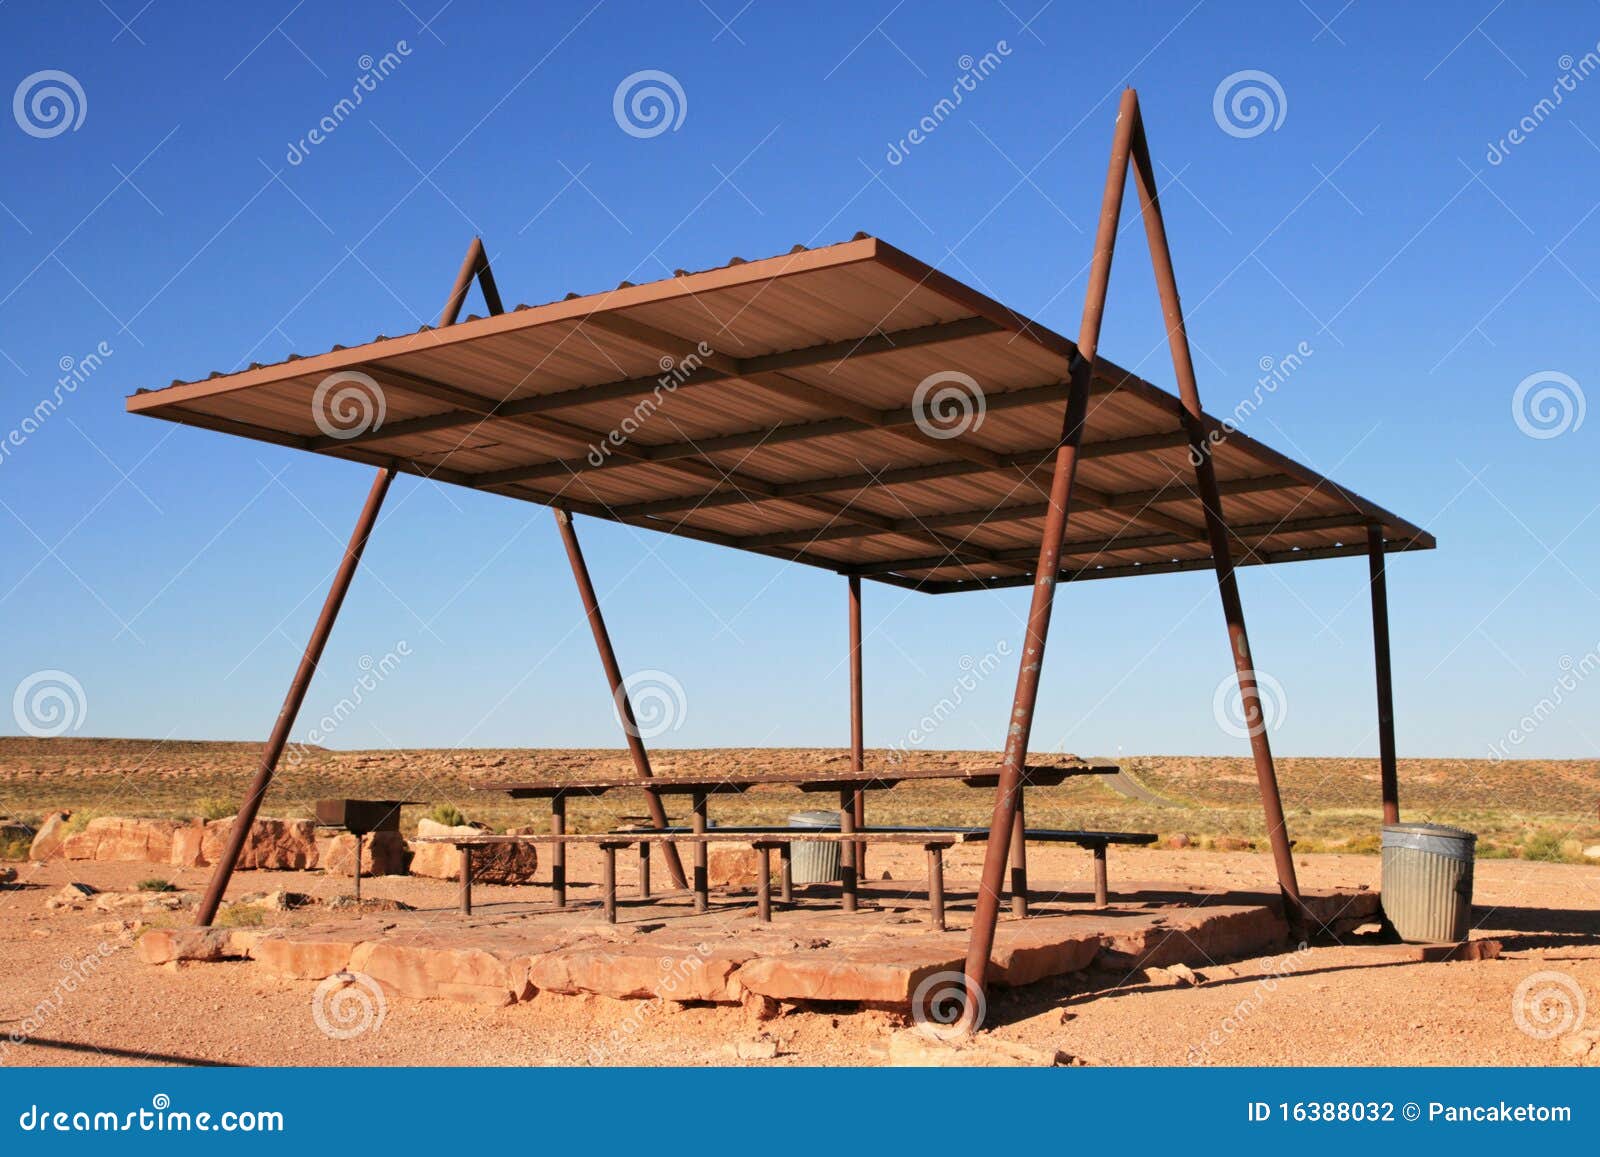 Picnic shelter stock photo. Image of utah, brown, table ...